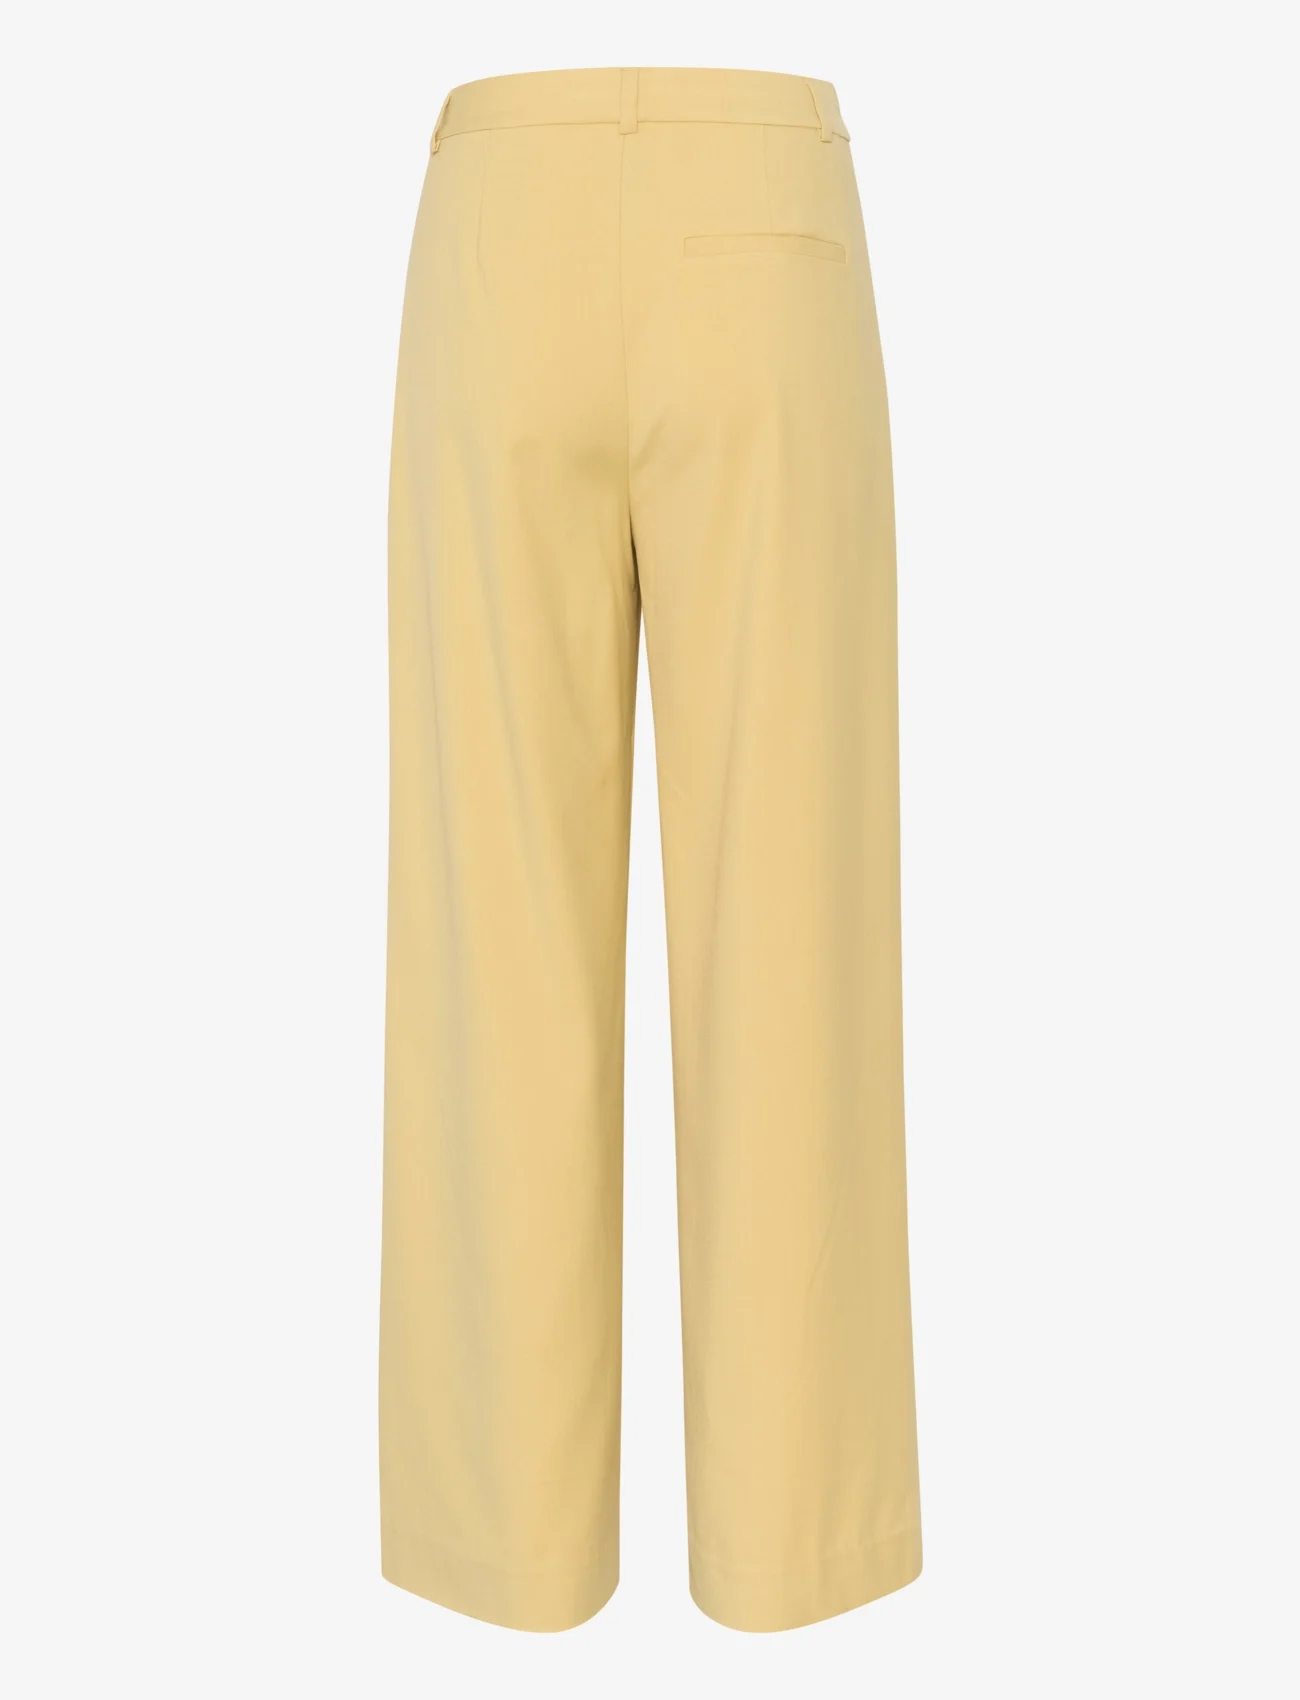 Gestuz - PaulaGZ MW wide pants - tailored trousers - dried moss - 1